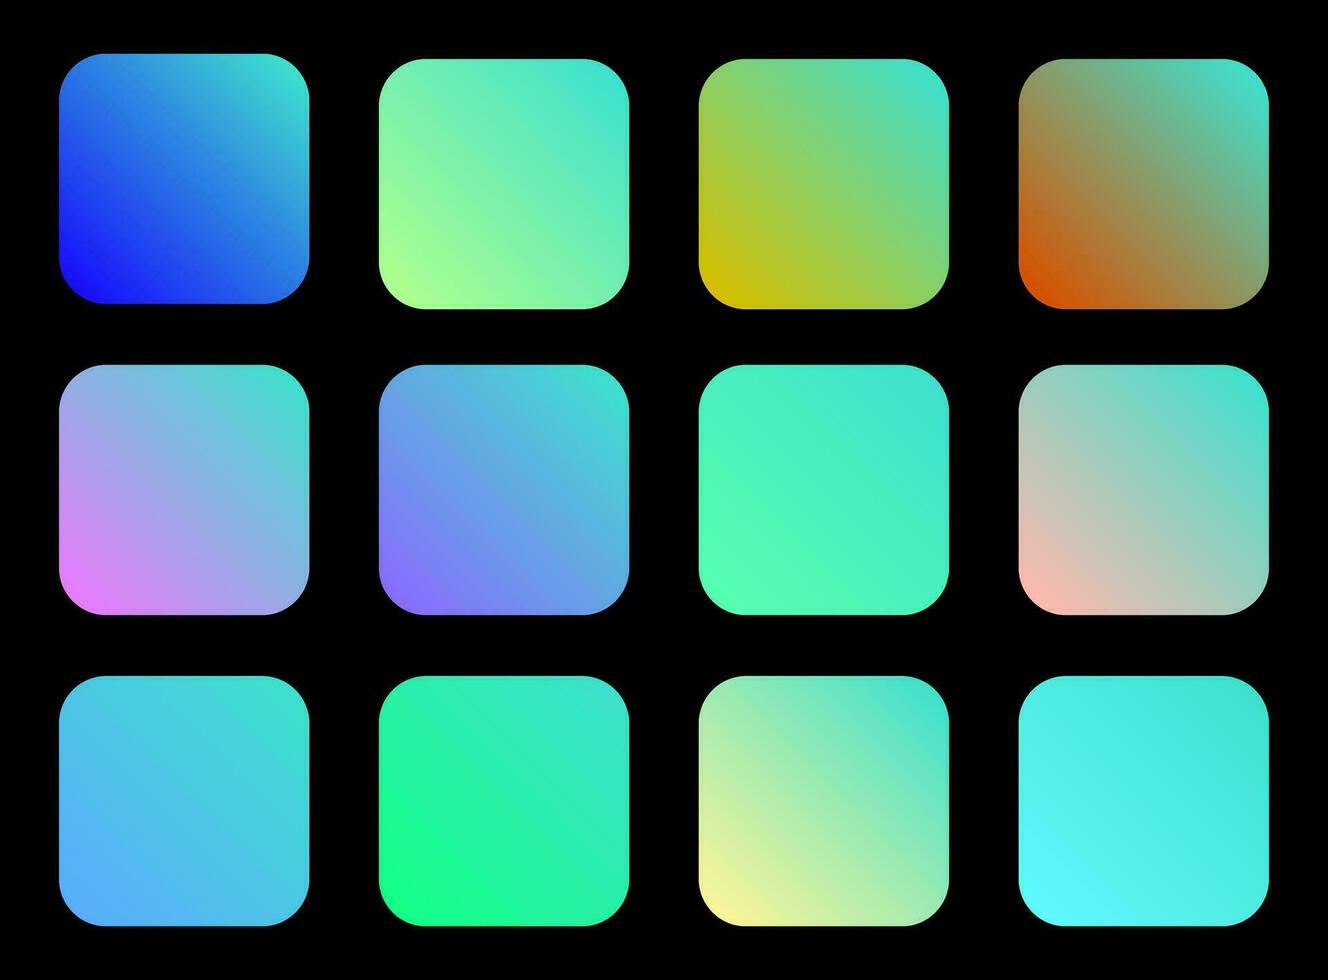 colorida turquesa cor sombra linear gradiente paleta amostras rede kit arredondado quadrados modelo conjunto vetor